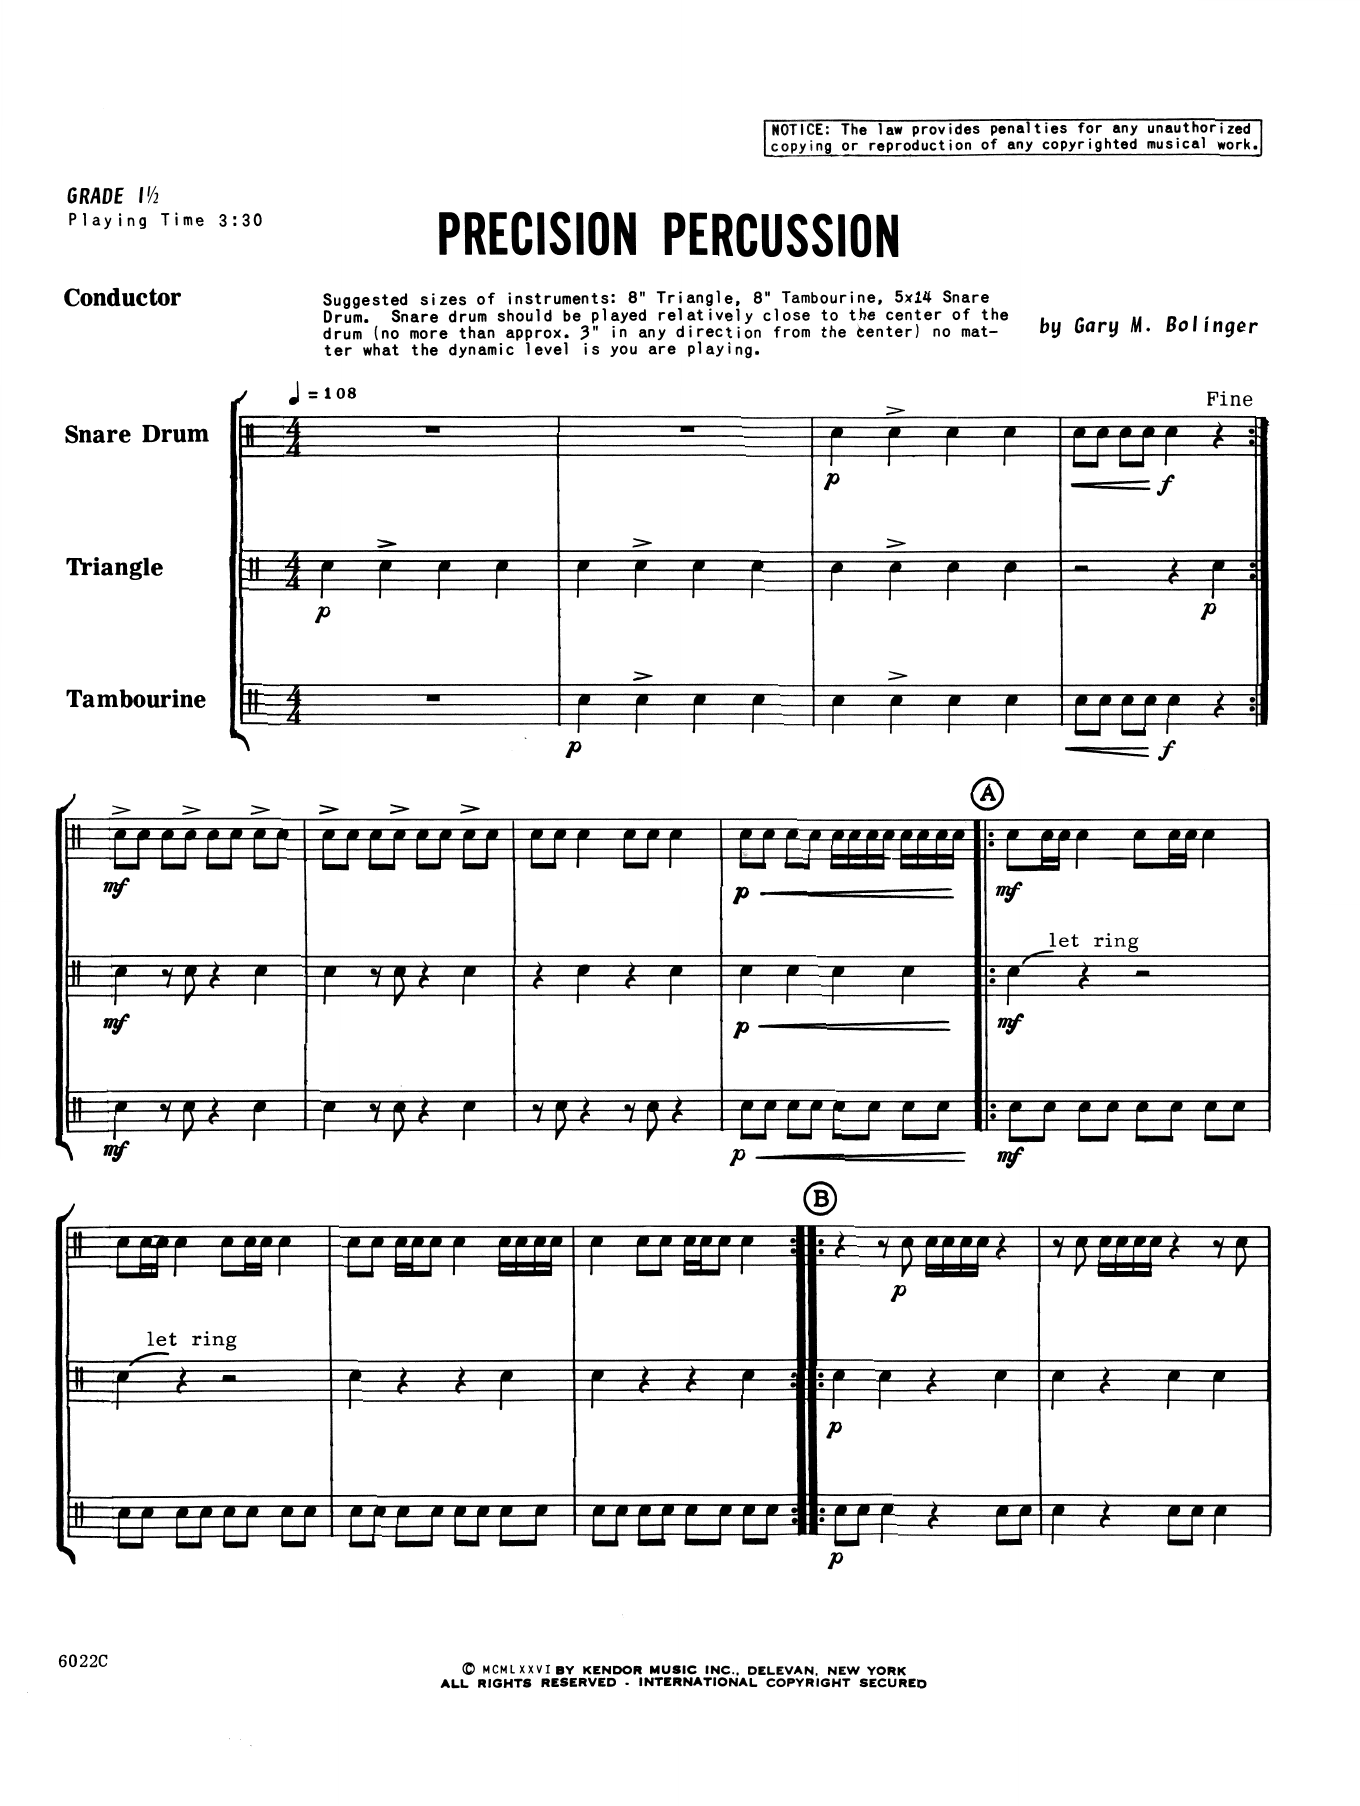 Download Gary M. Bolinger Precision Percussion - Full Score Sheet Music